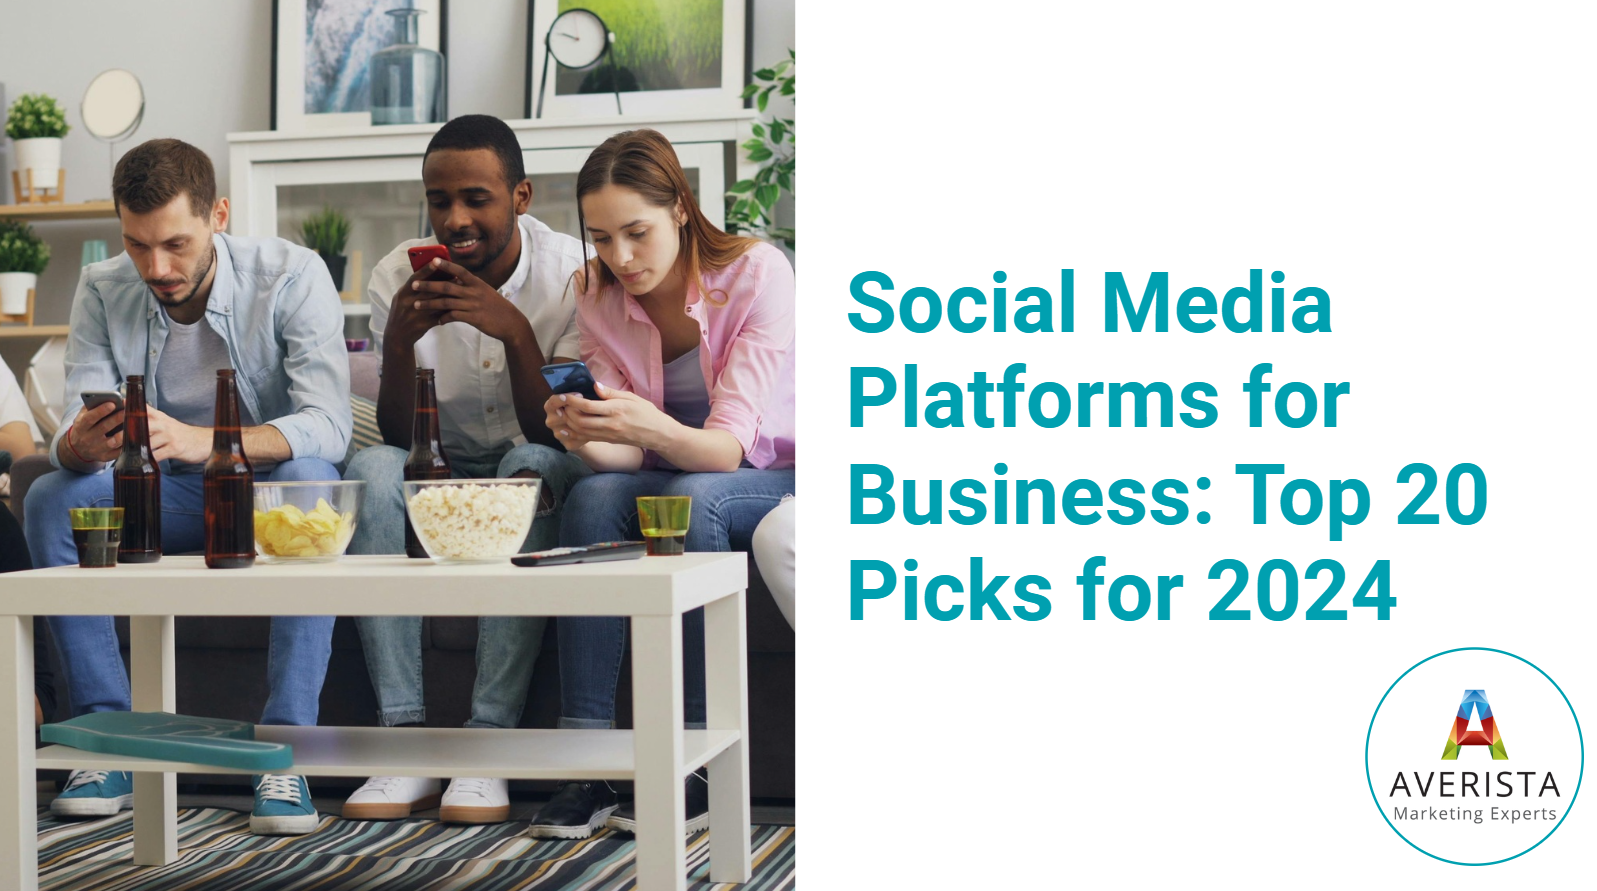 Top 20 Social Media Platforms for Business in 2024